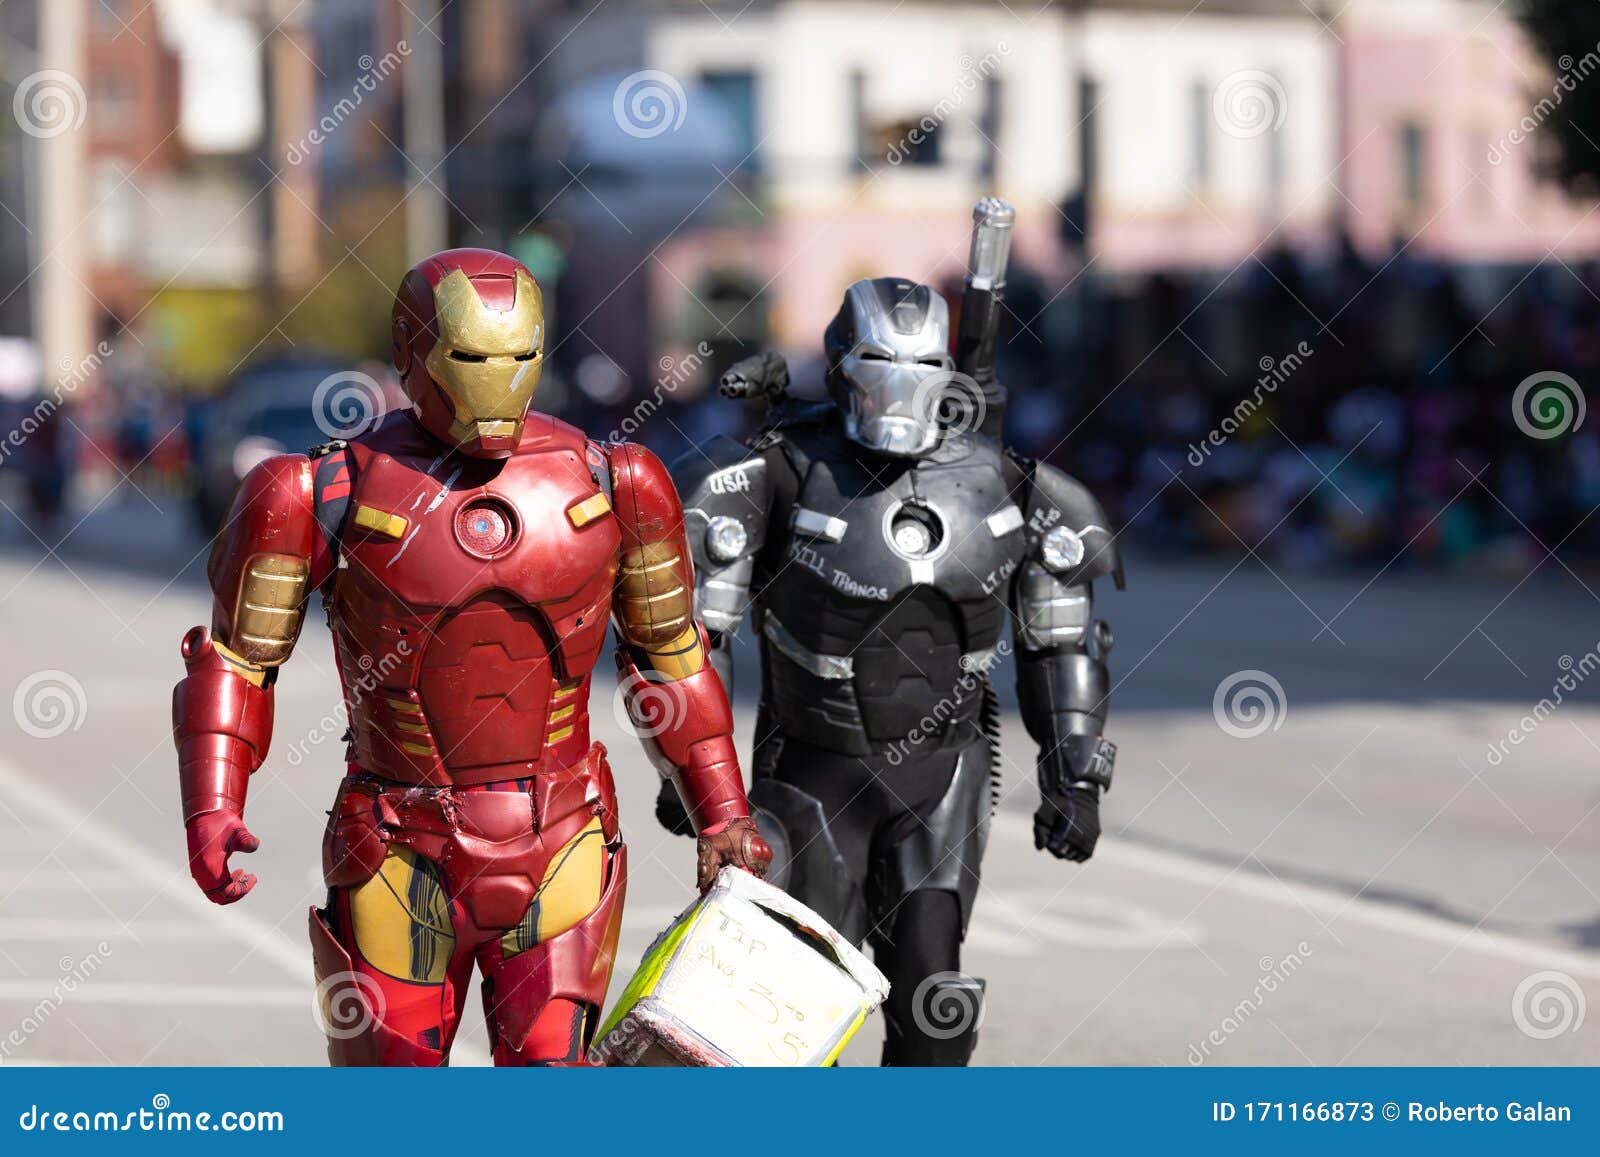 Superhero Iron Man Dress Costume For Kids